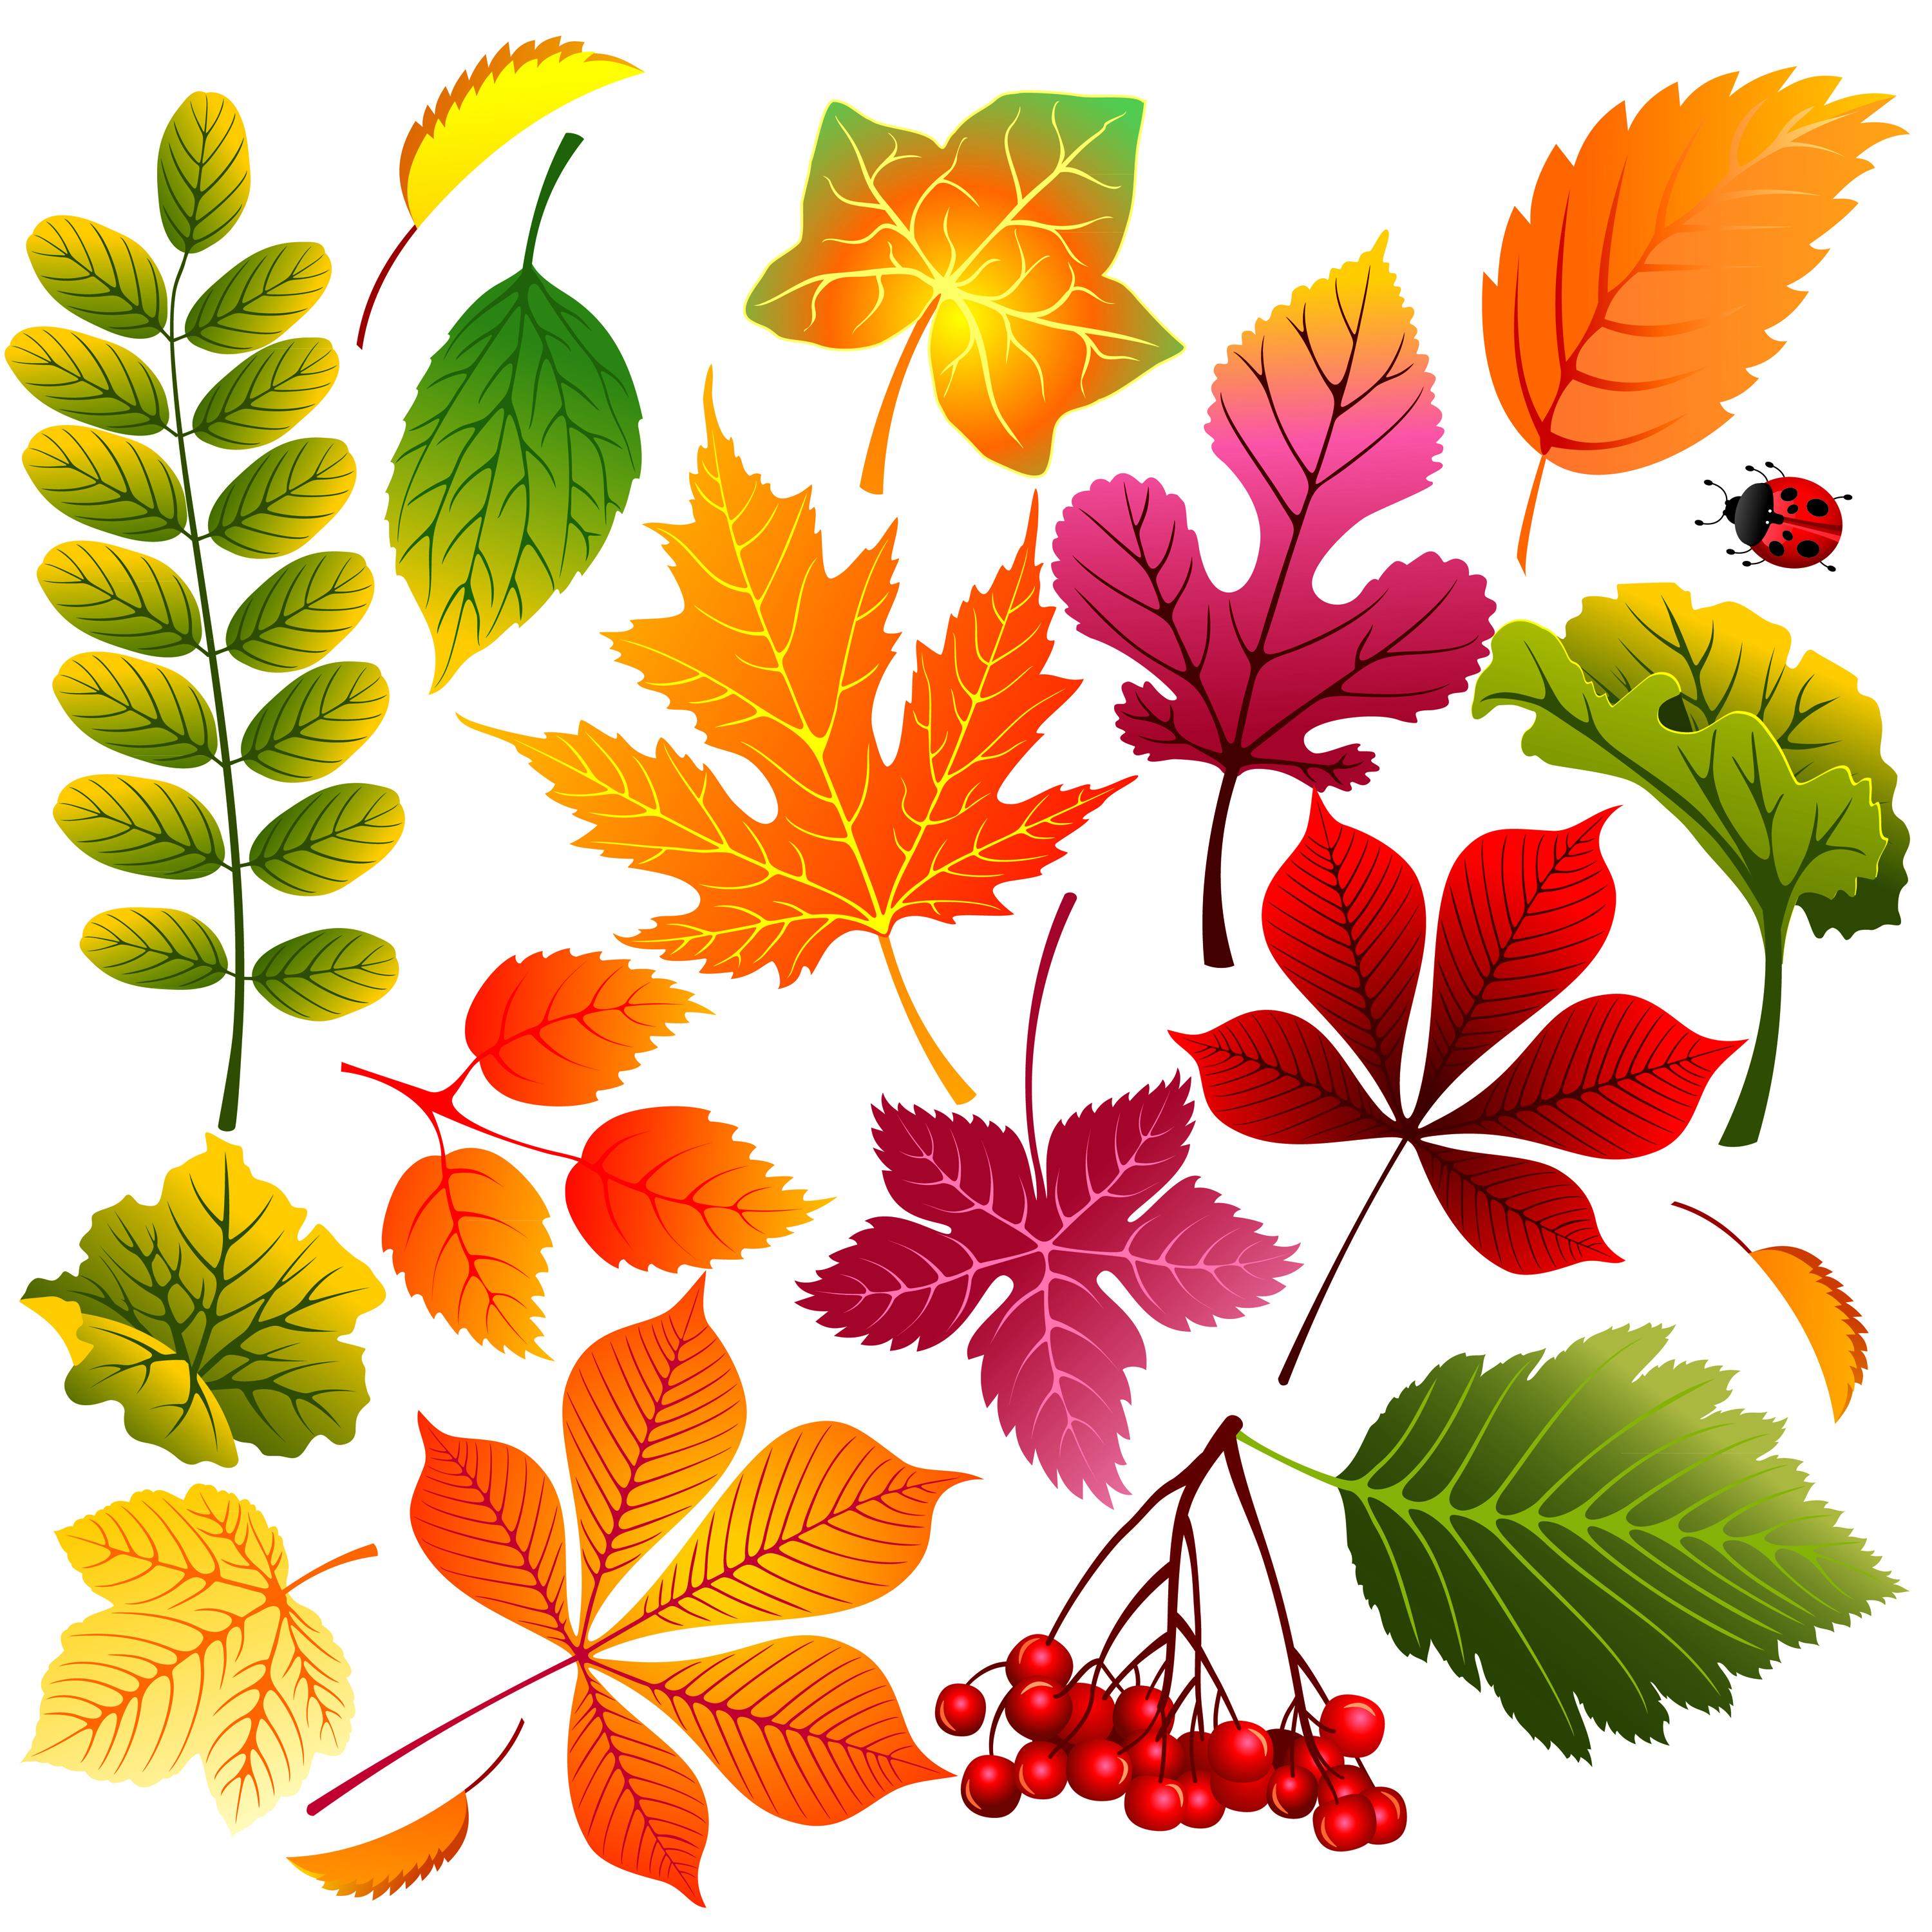 Fall leaf details